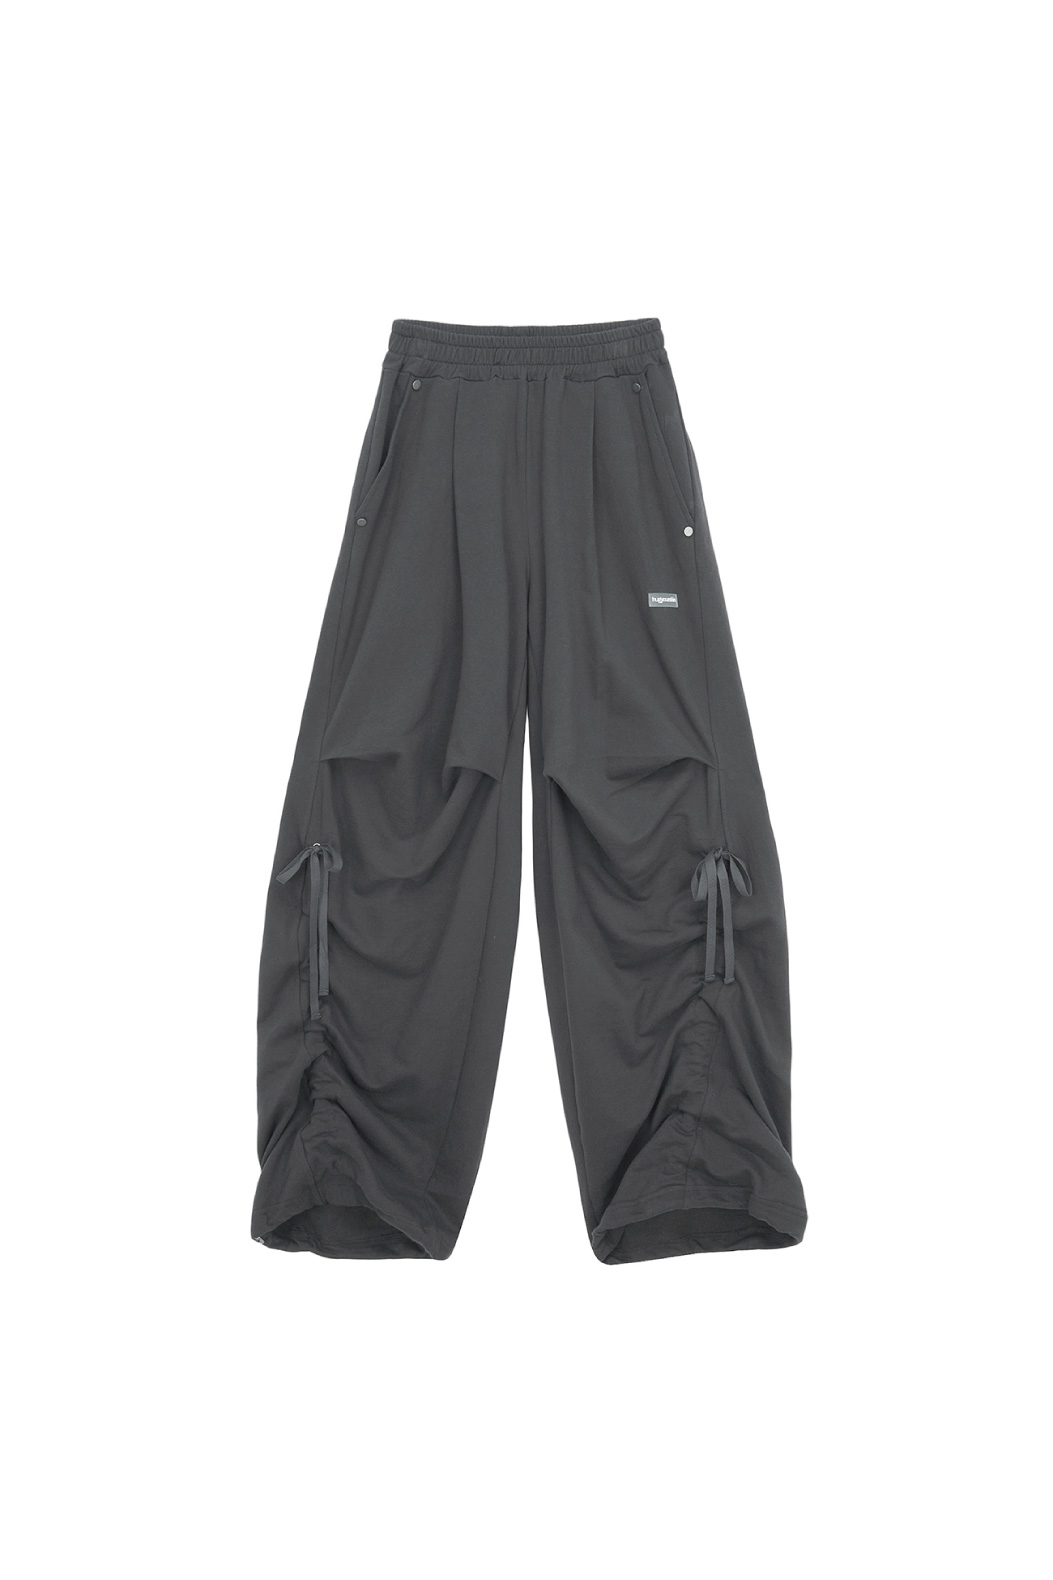 wide jogger pants HS ver (charcoal)